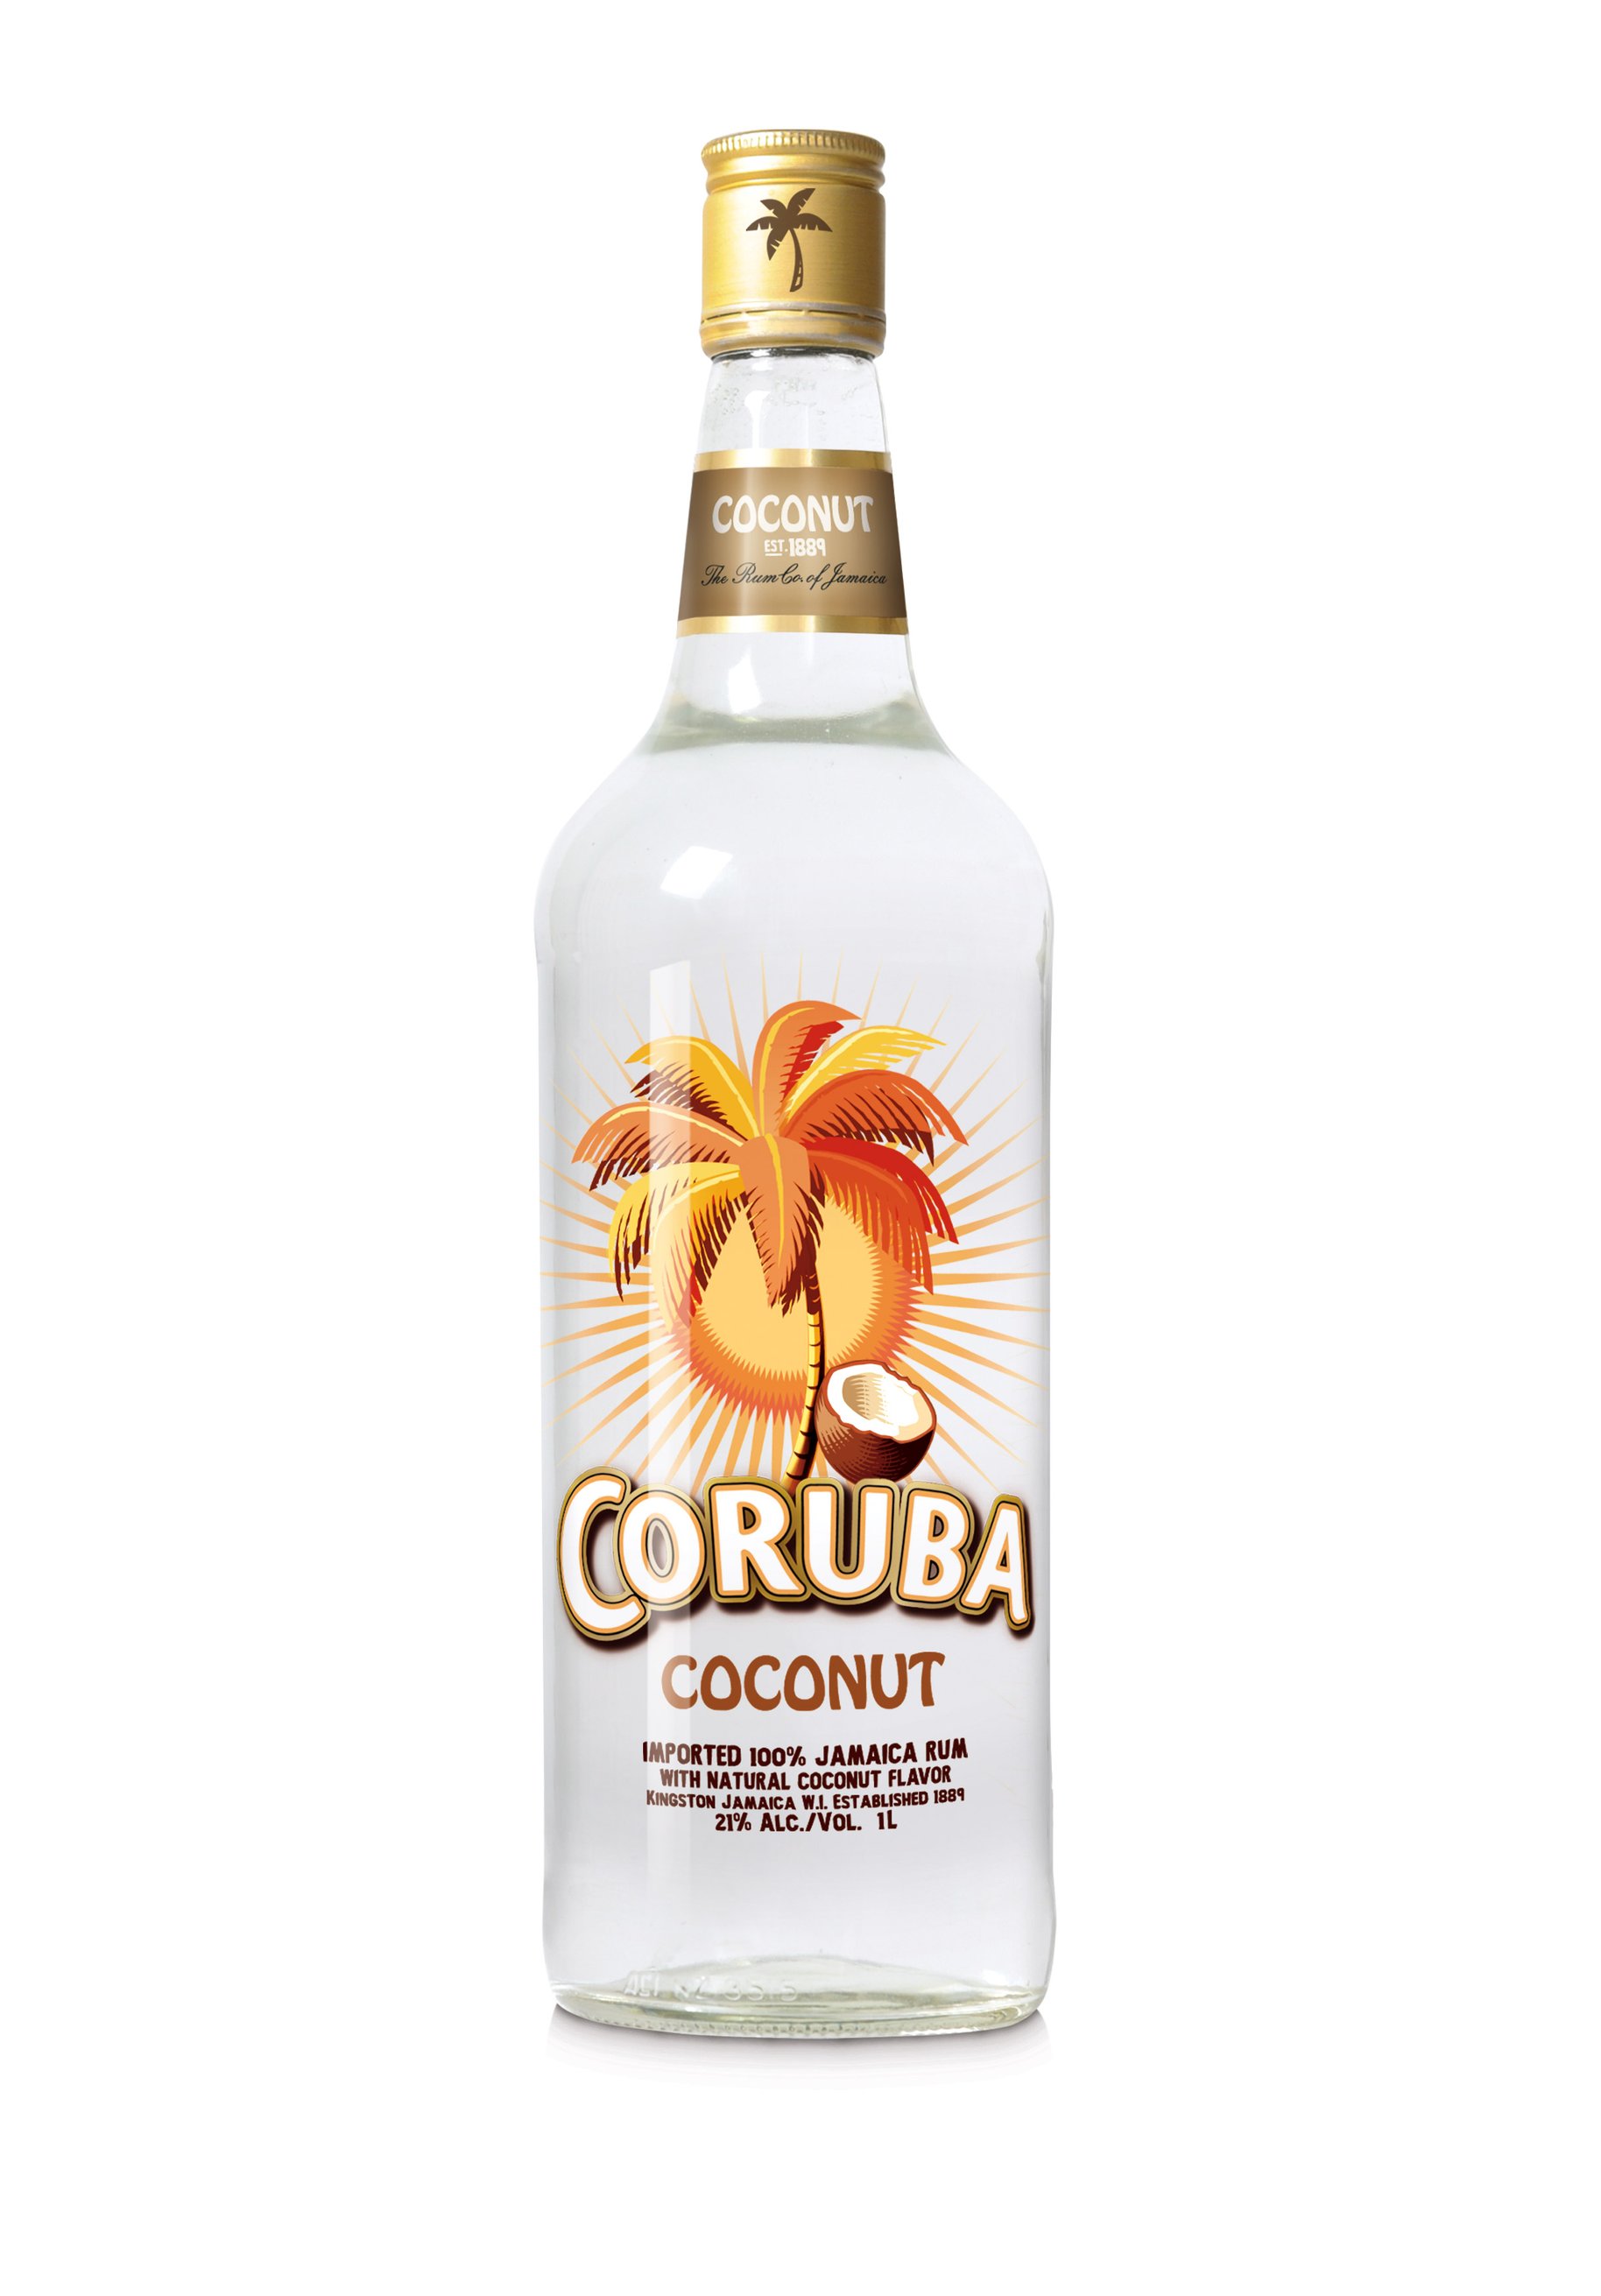 Coconut Coruba Bottle Packaging 